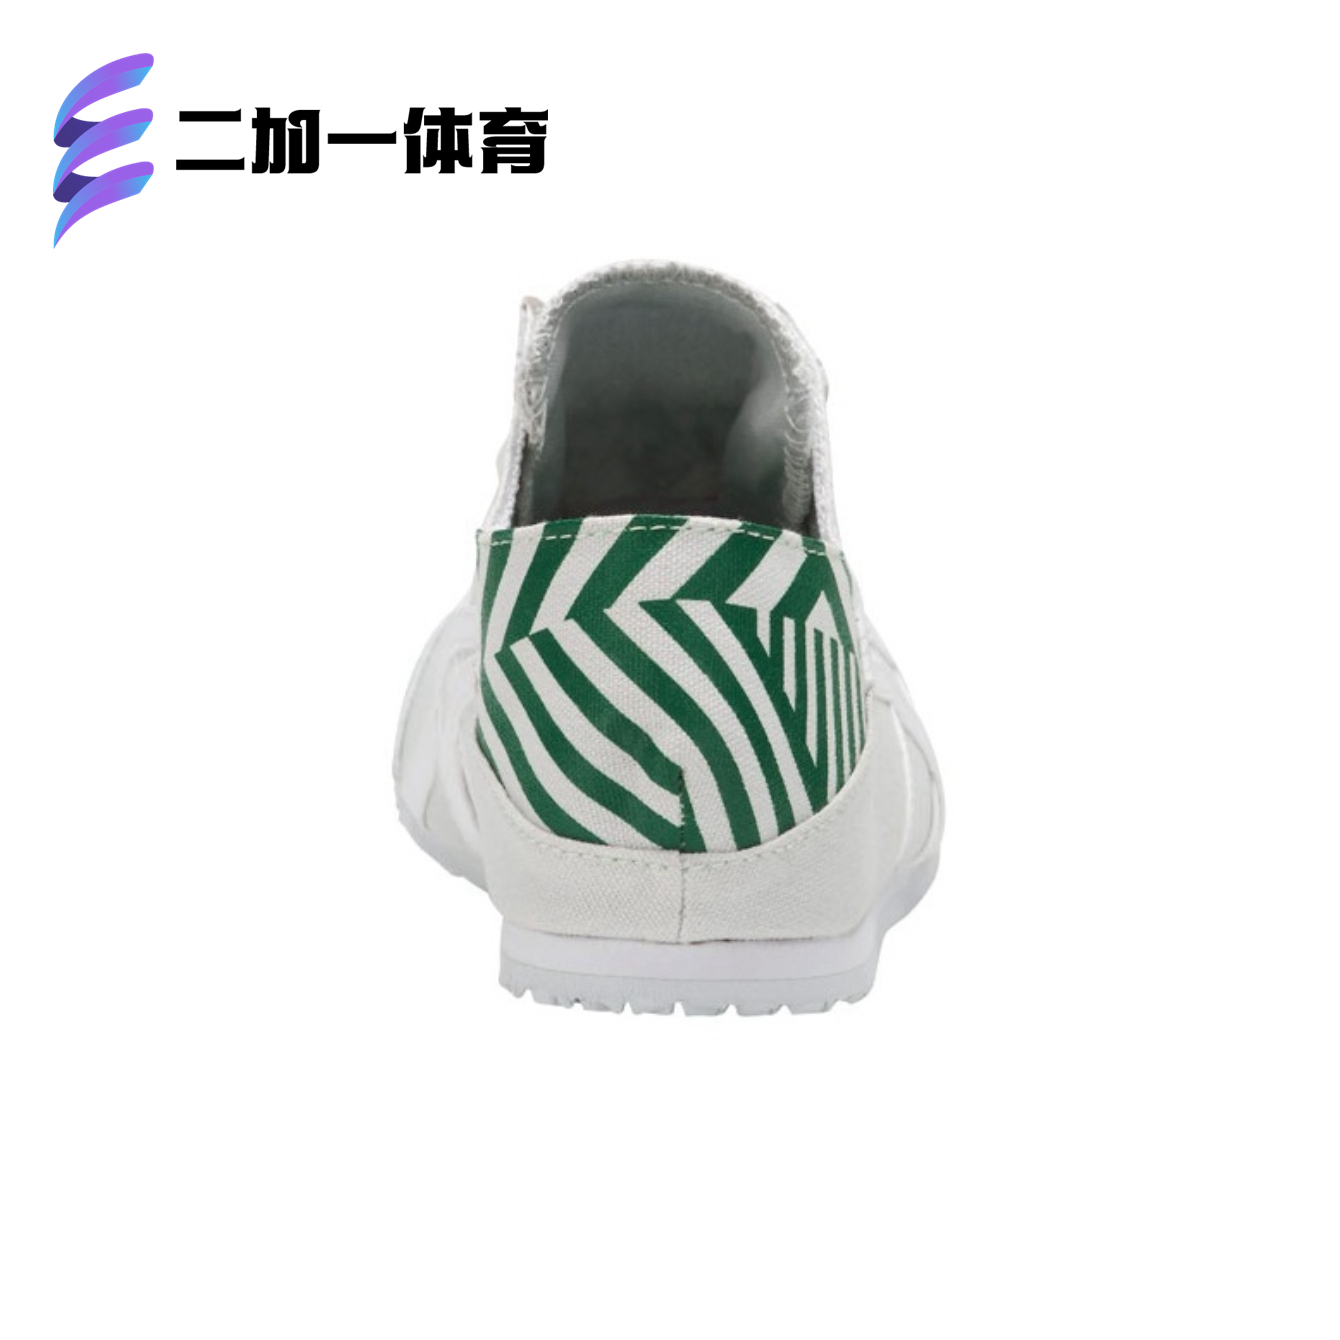 Onitsuka Tiger鬼塚虎MEXICO 66 SLIP-ON男女鞋休闲鞋D342N-9601-图2